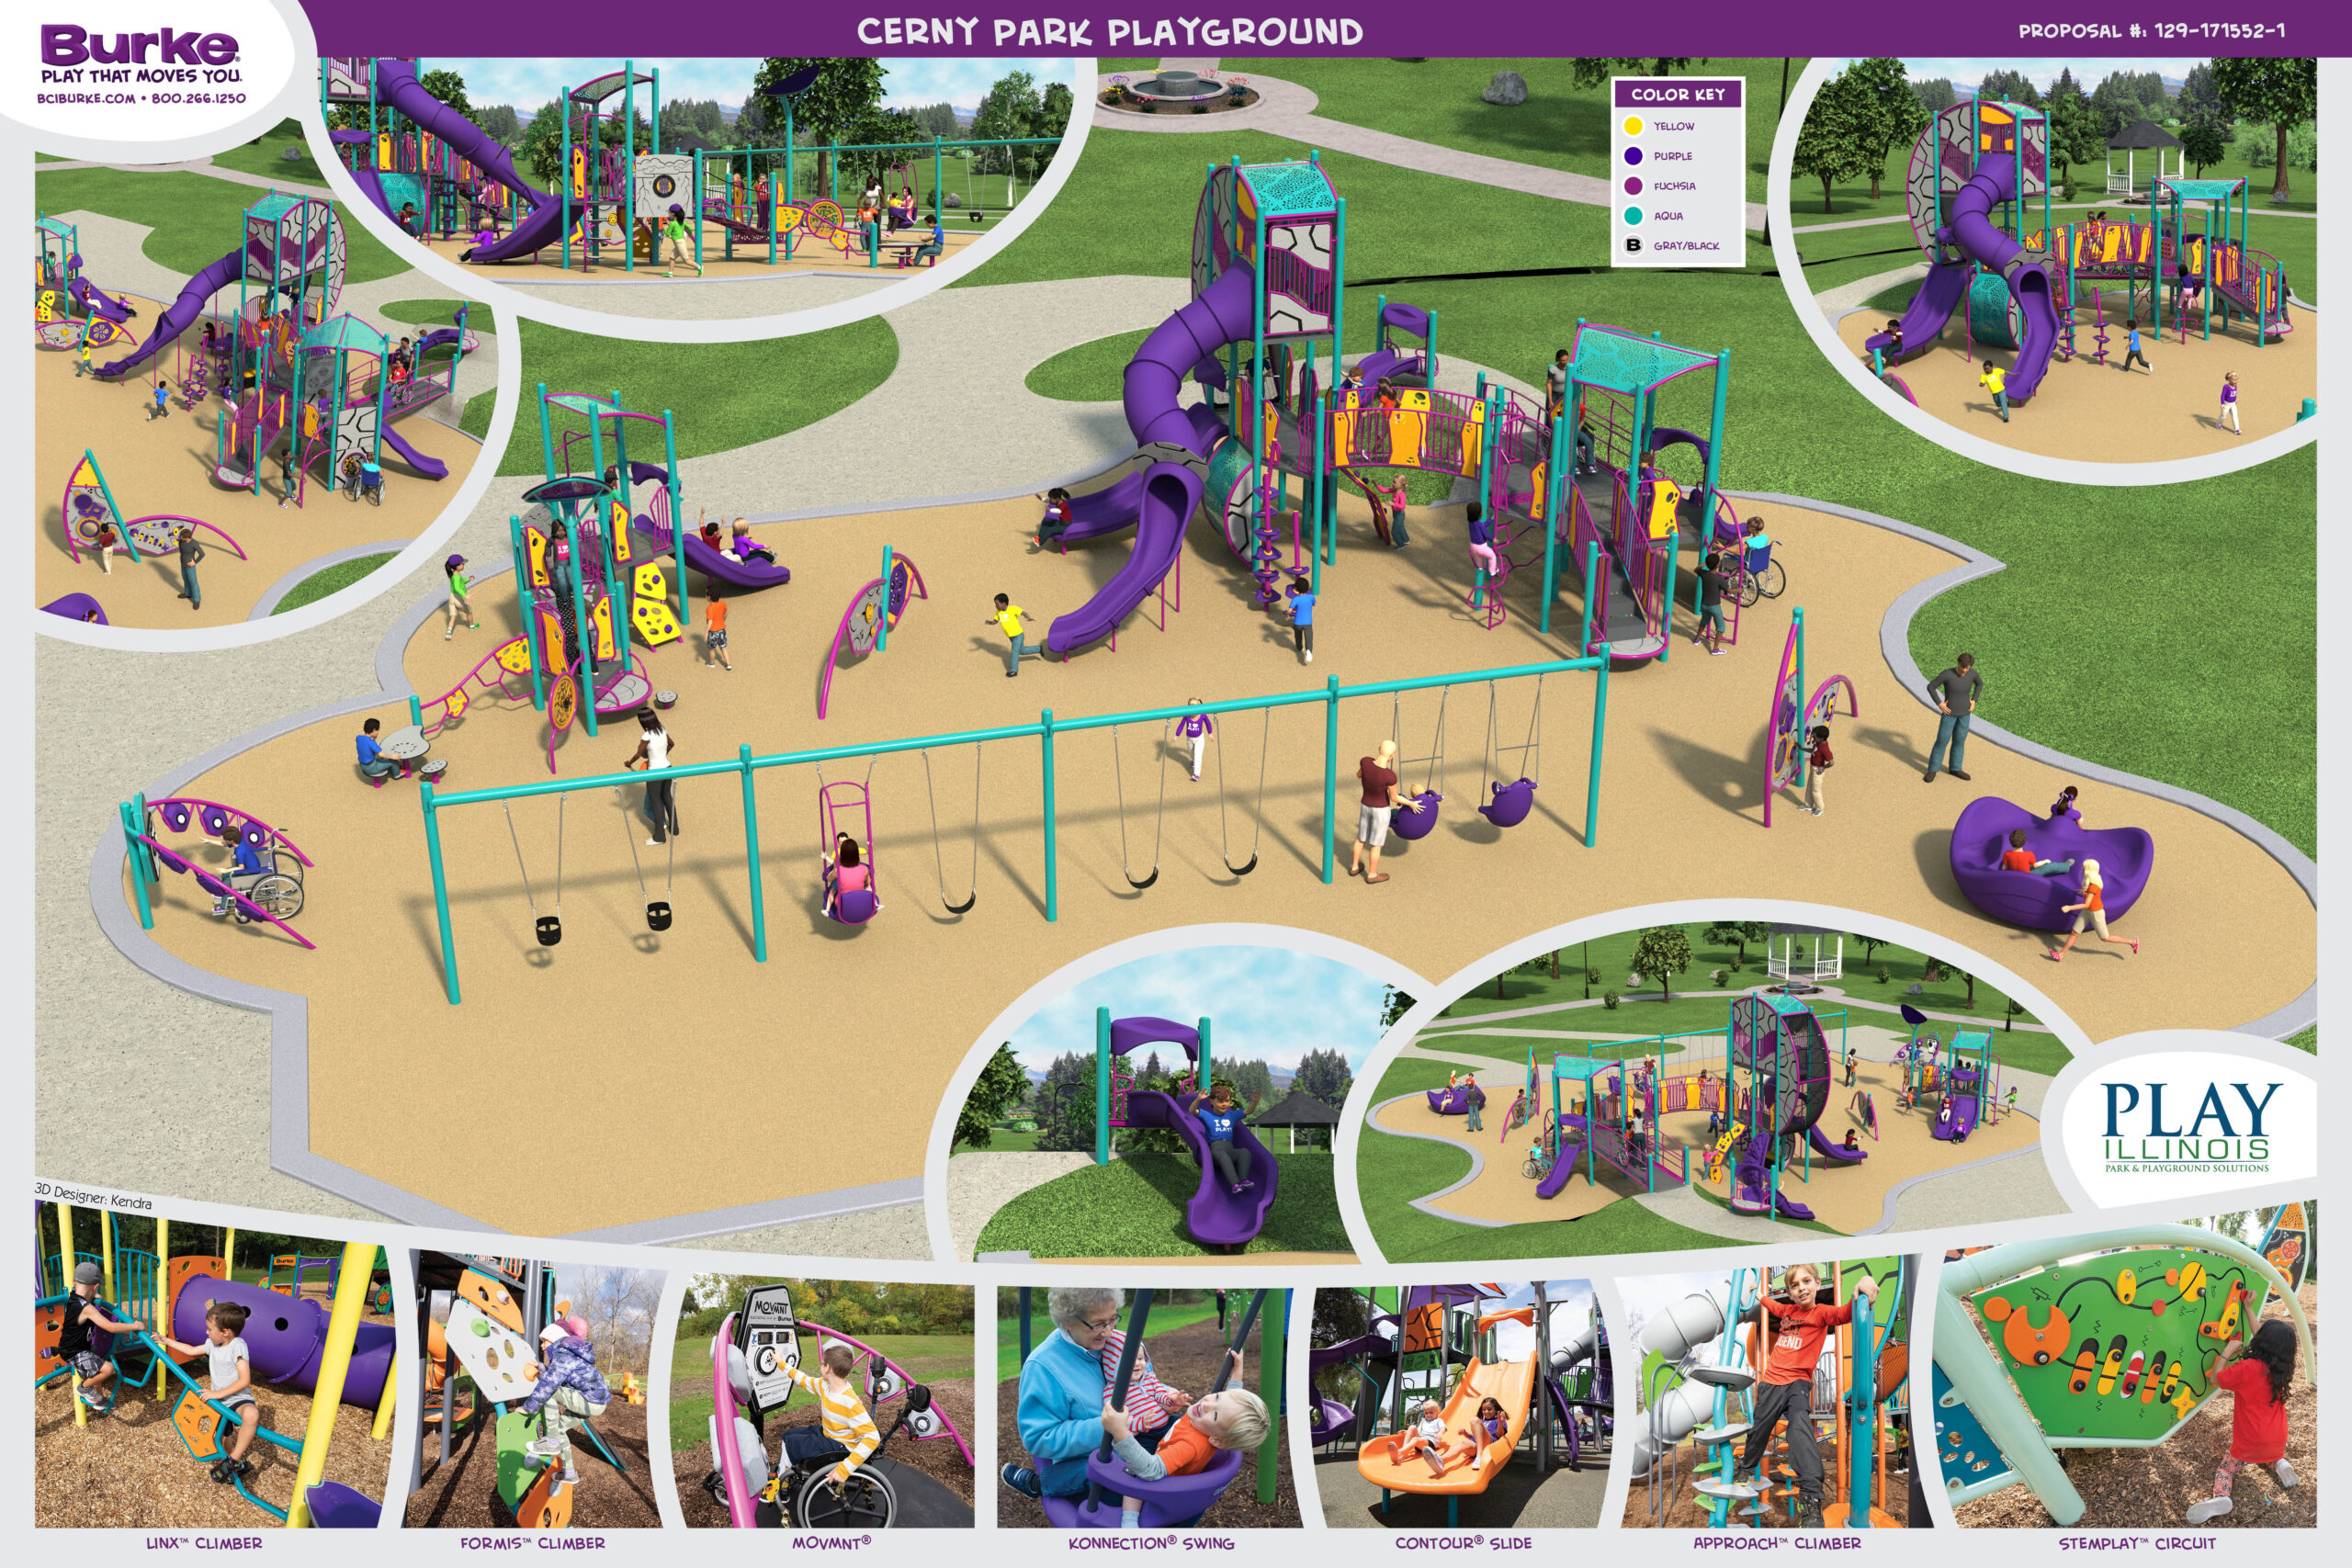 Cerny Park Playground